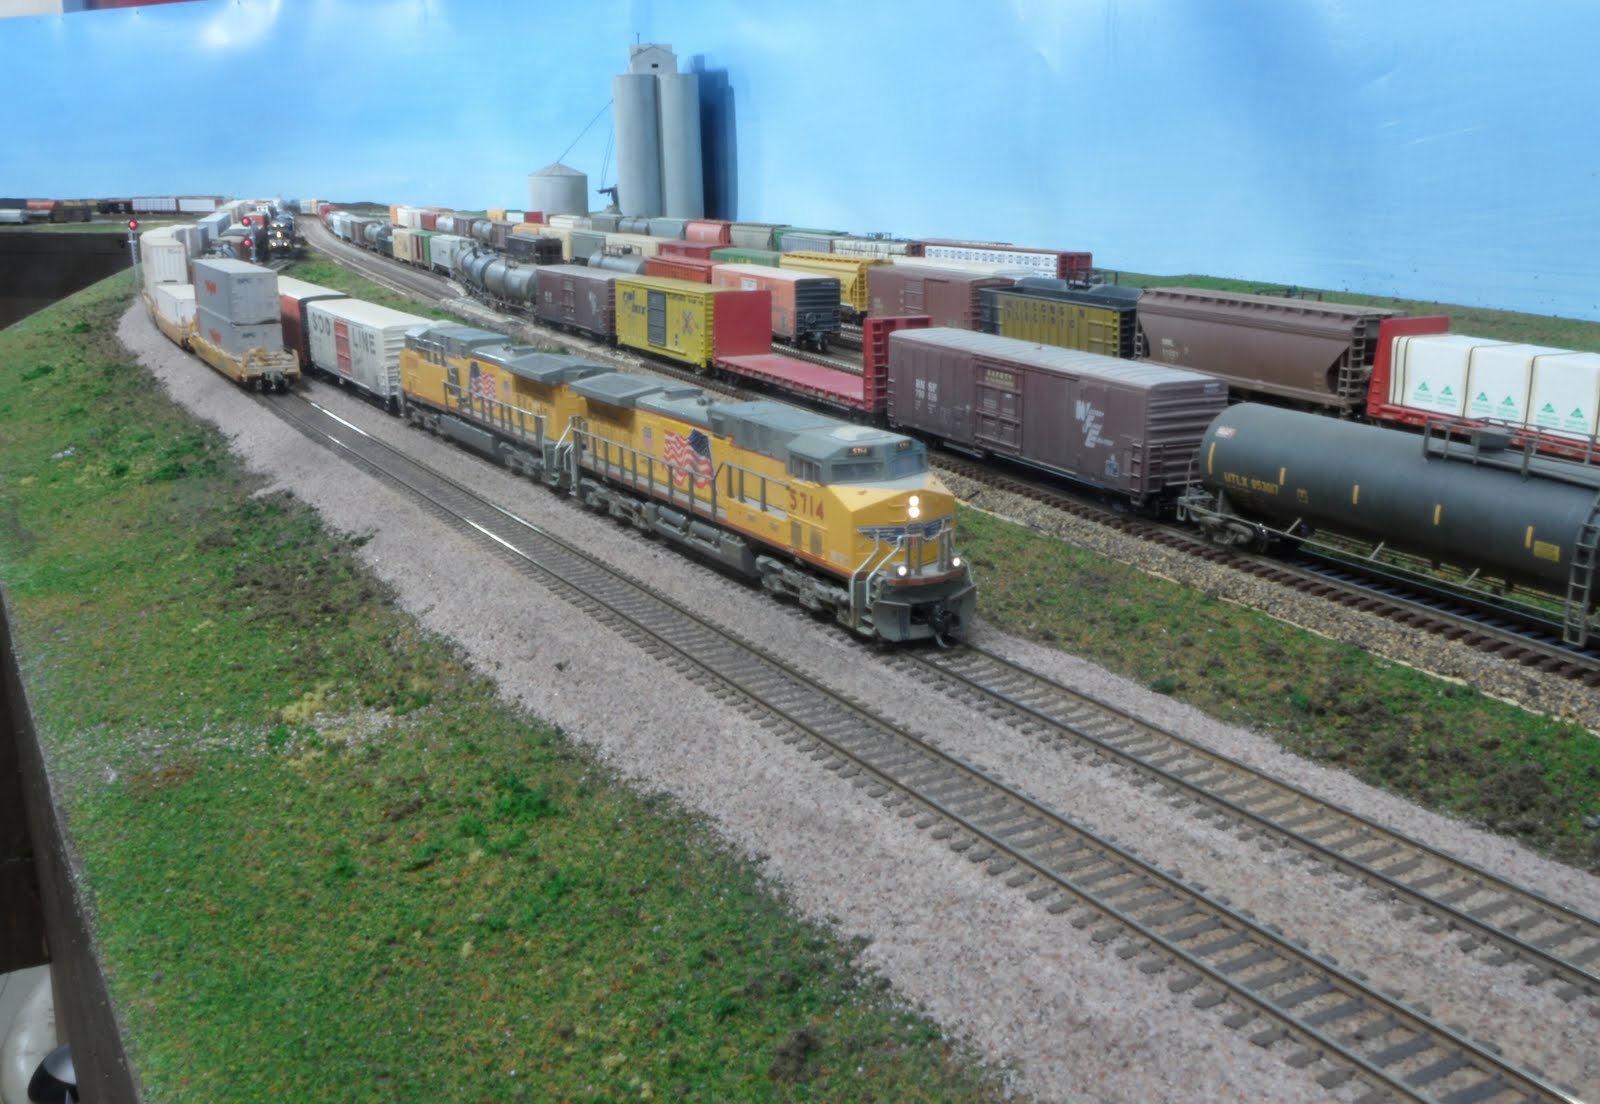 Scale Union Pacific Railroad - Class I Midwest Model Railroading 